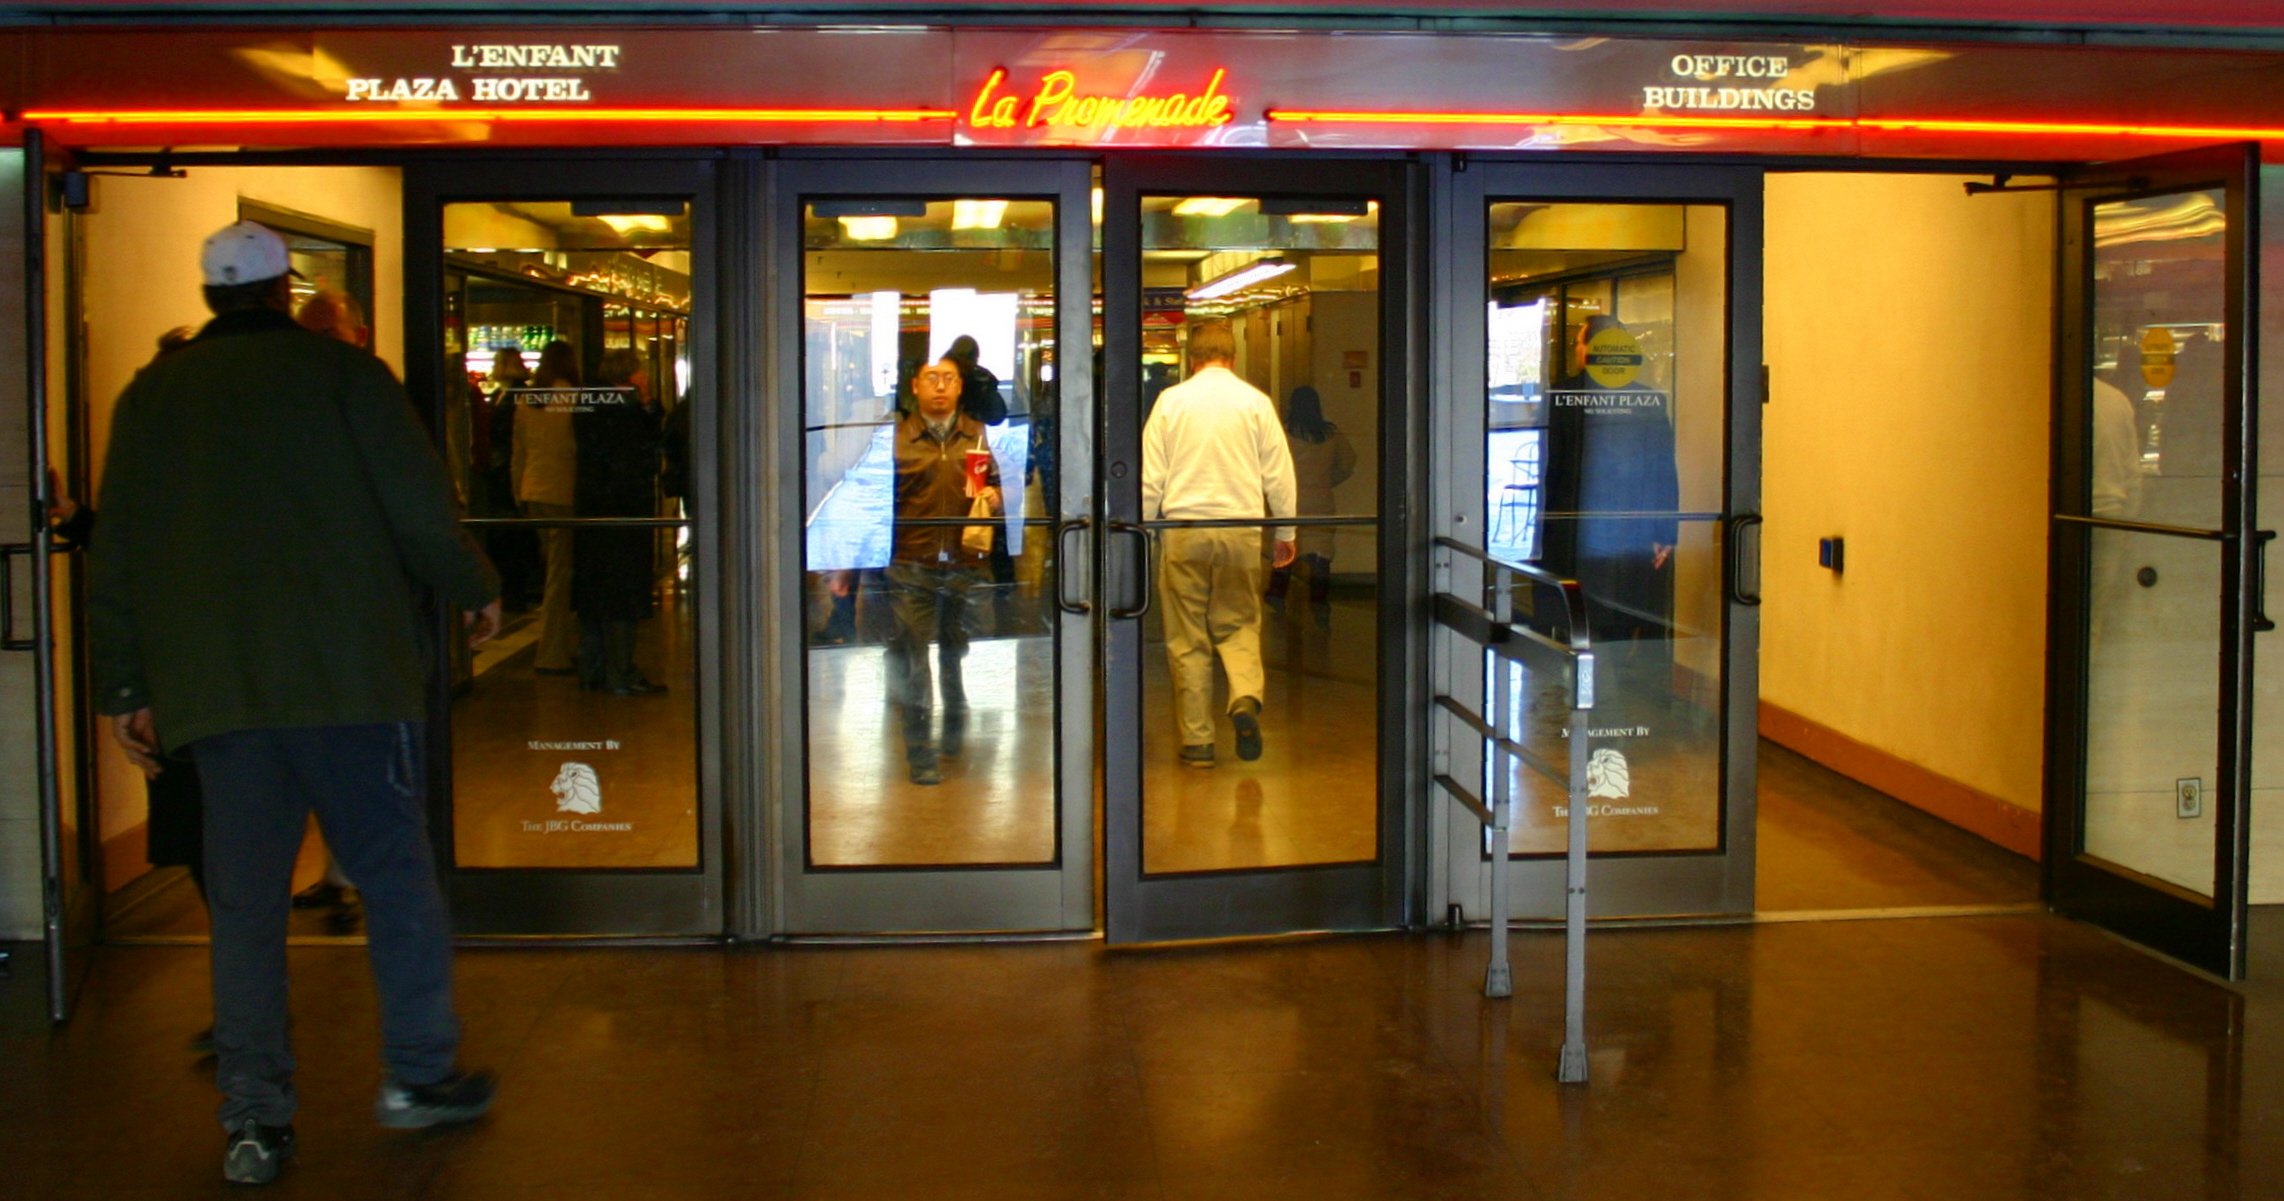 a man walks into a el with an entrance sign